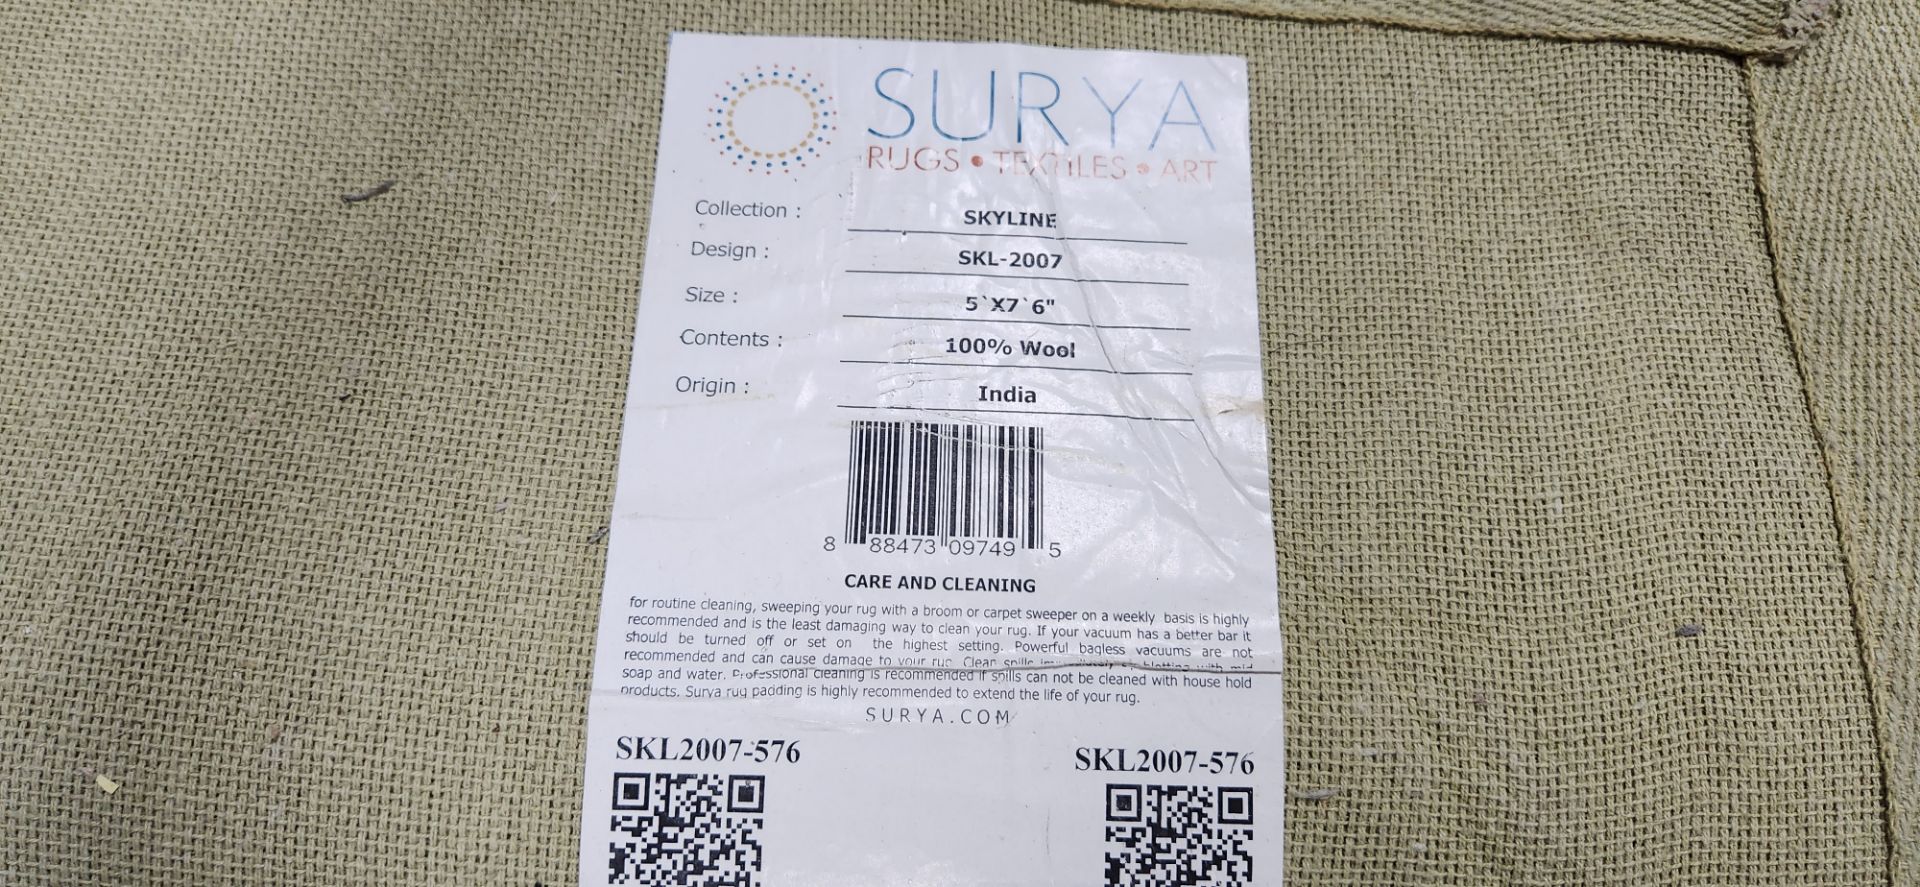 SURYA SKYLINE SKL-2007 5' X 7'6" 100% WOOL RUG, MADE IN INDIA - Image 2 of 2